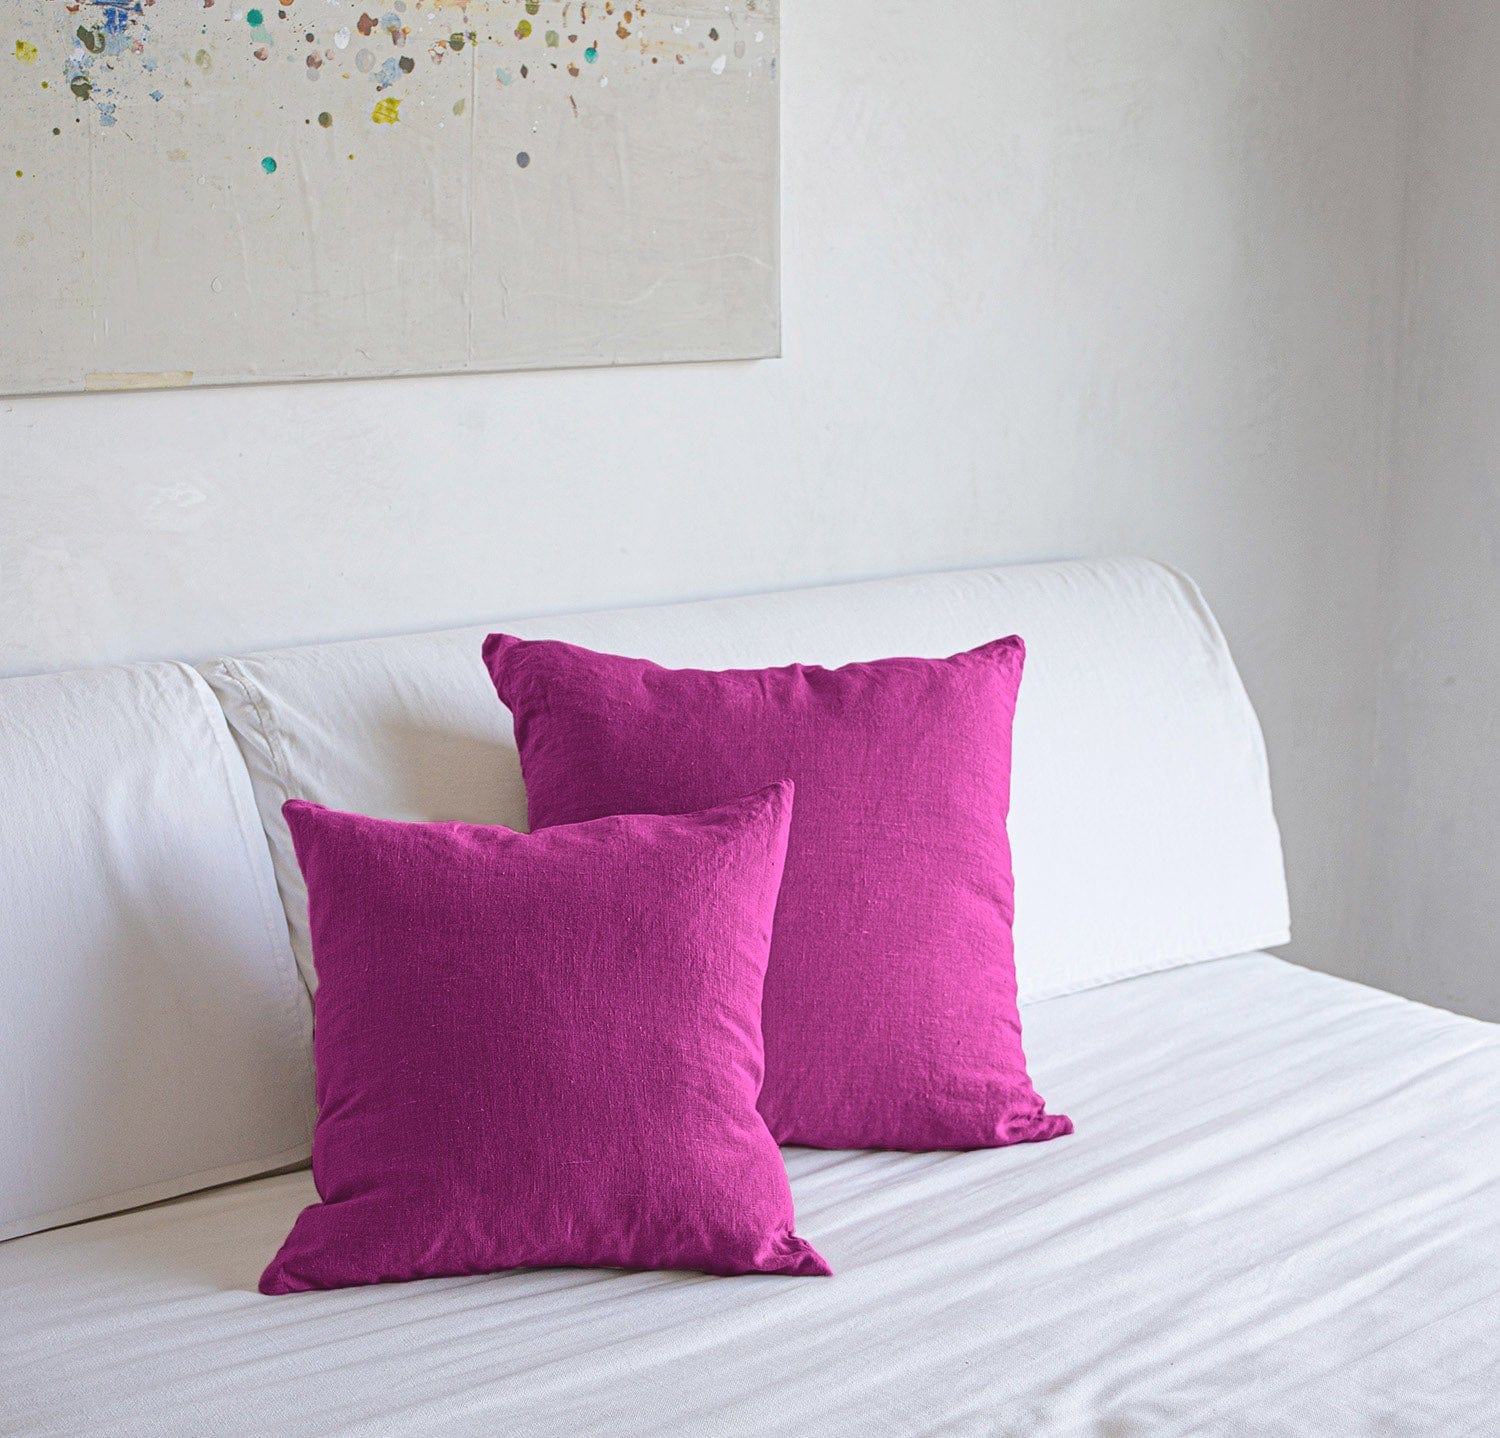 Rough Linen | 24 St. Barts Linen Square Throw Pillow Cover | Moss